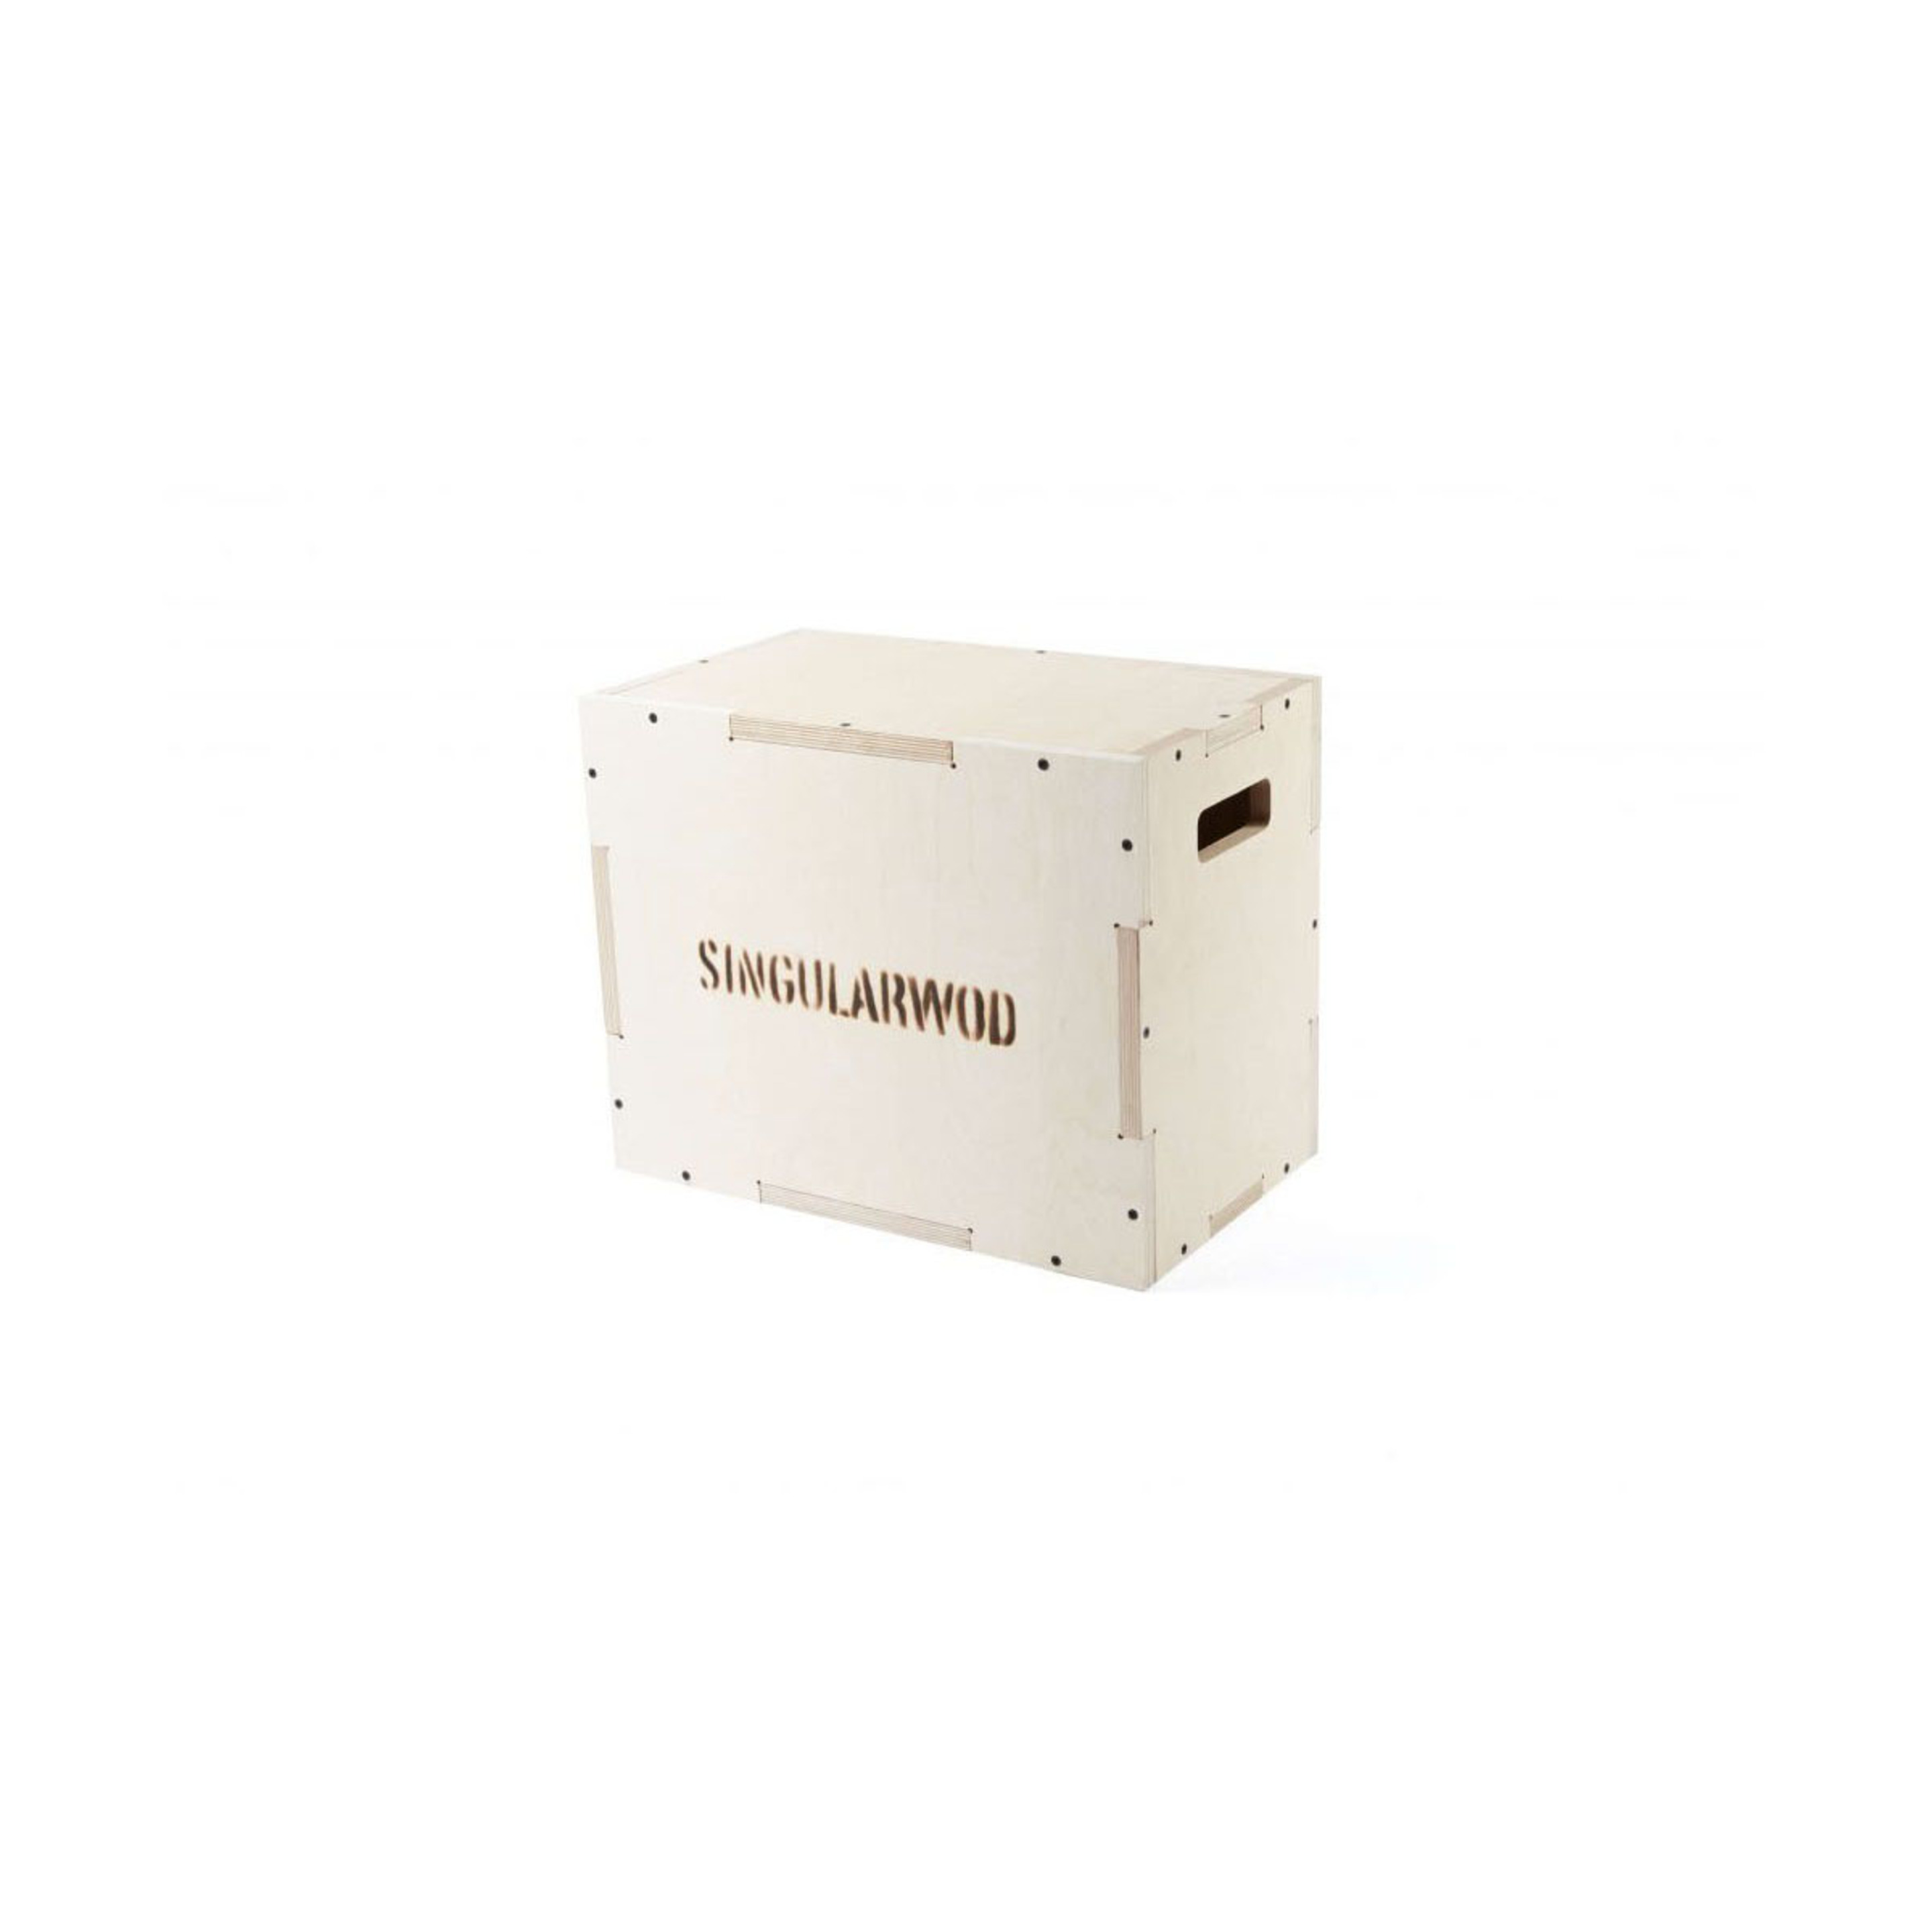 Cajón Pliométrico Jump Box Pequeño Eucalipto (40x30x50 Cm) Singular Wod - marron - 